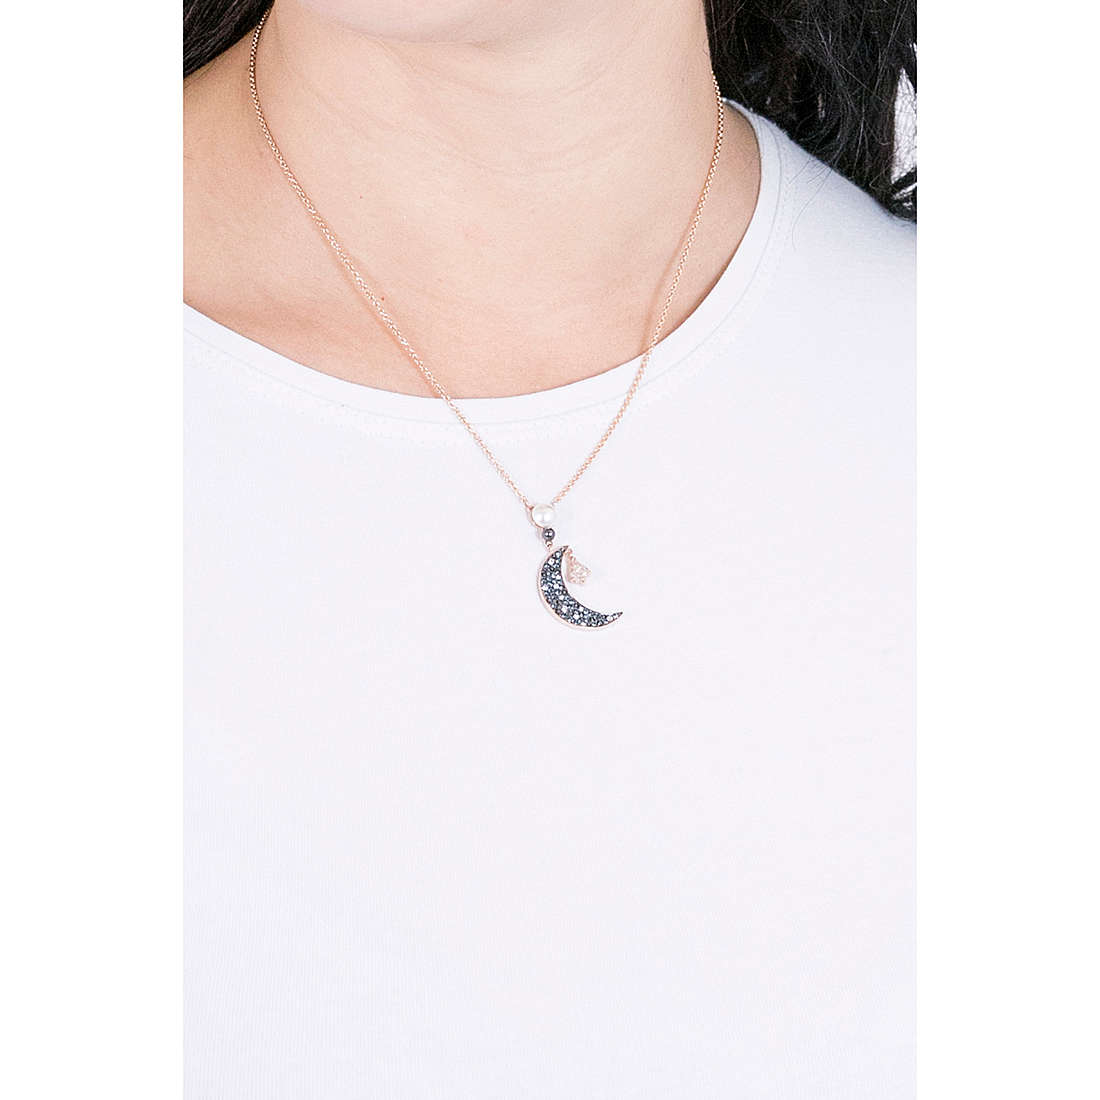 Swarovski necklaces Symbolic woman 5489534 wearing